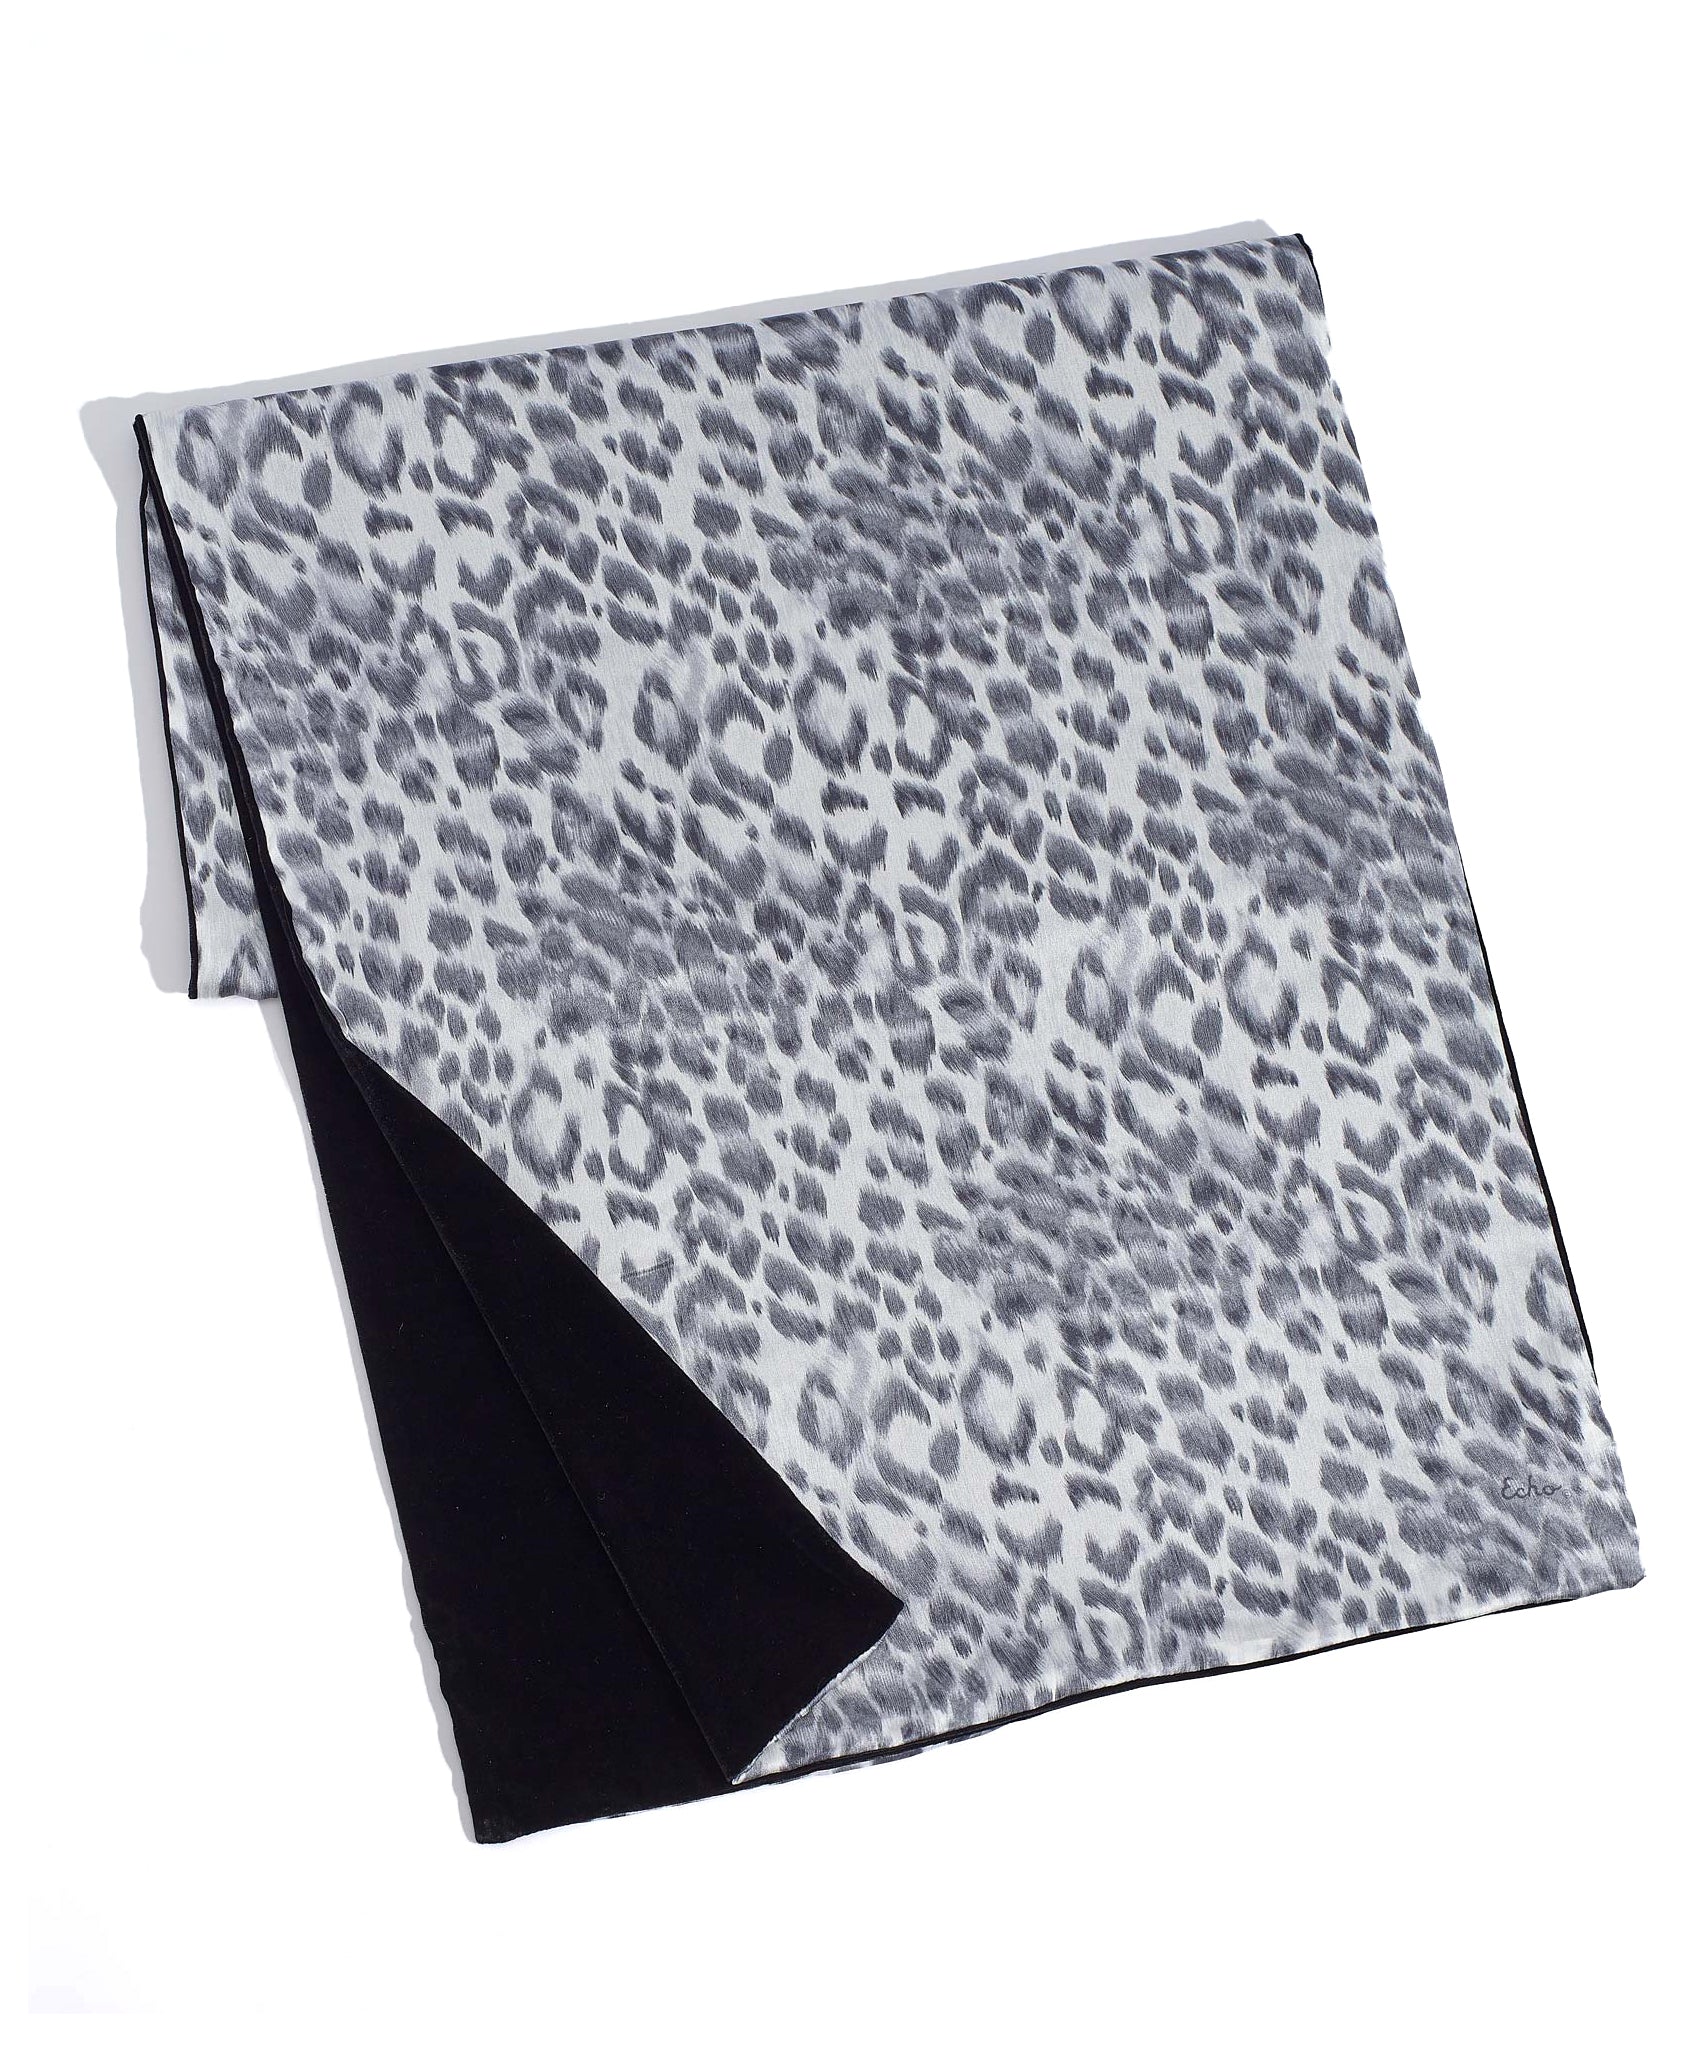 Leopard Velvet Tubular in color Silver